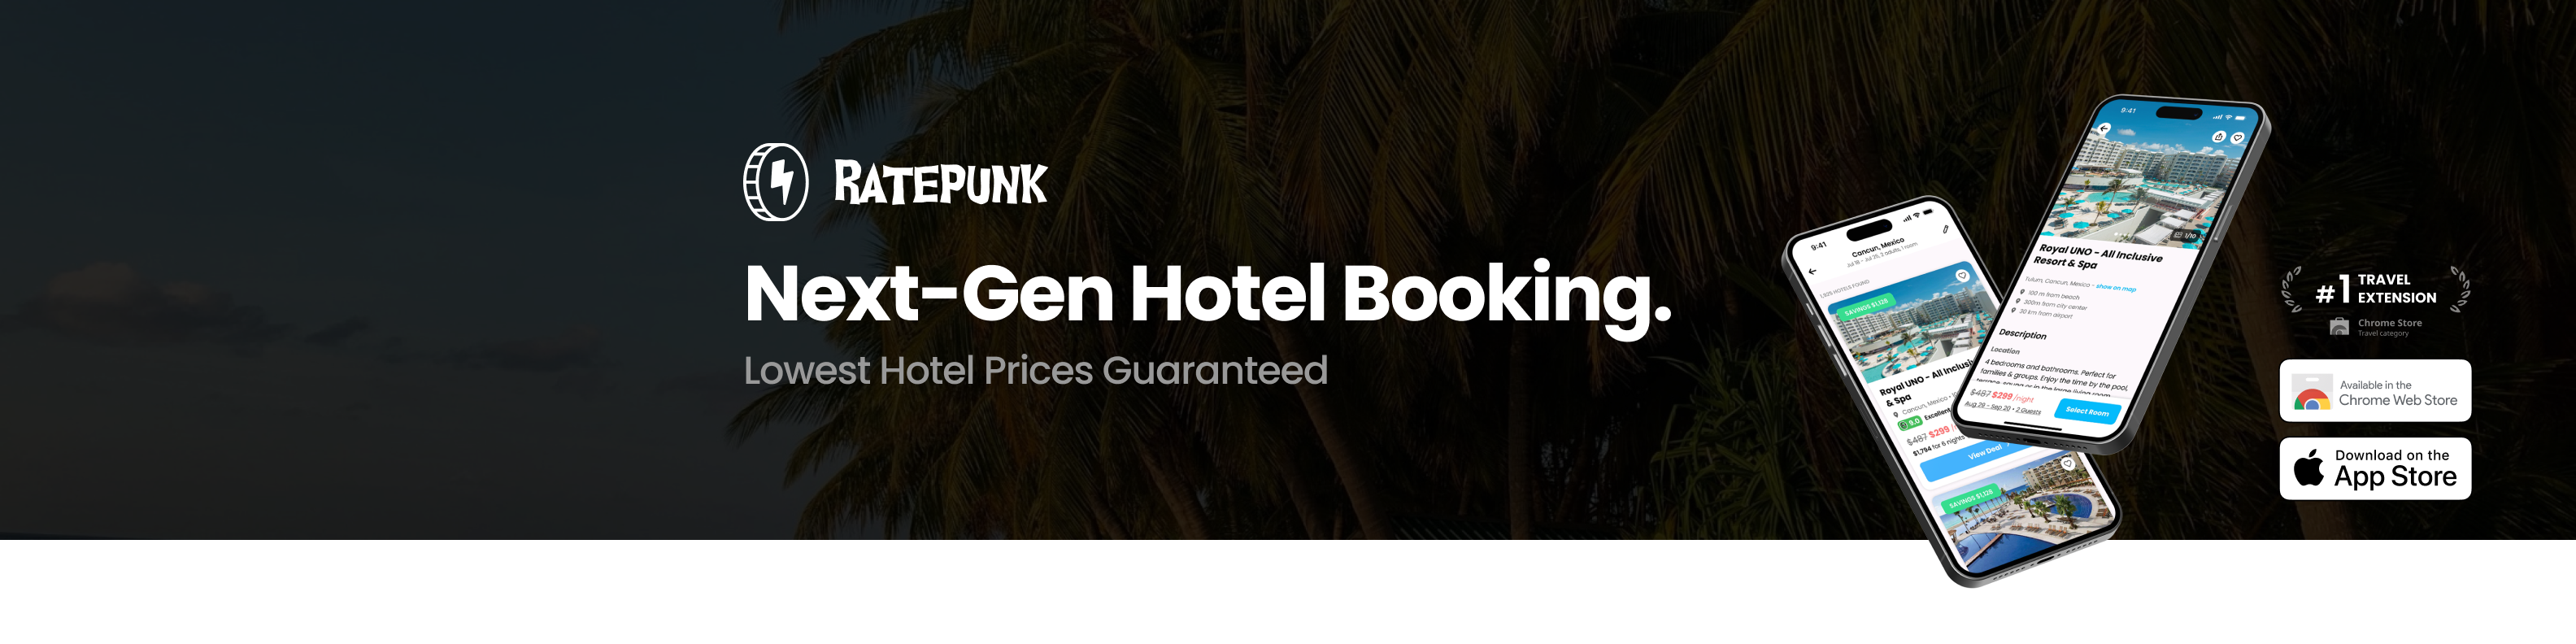 hotel price comparison - ratepunk mobile app & browser extension - save money travel cheap 